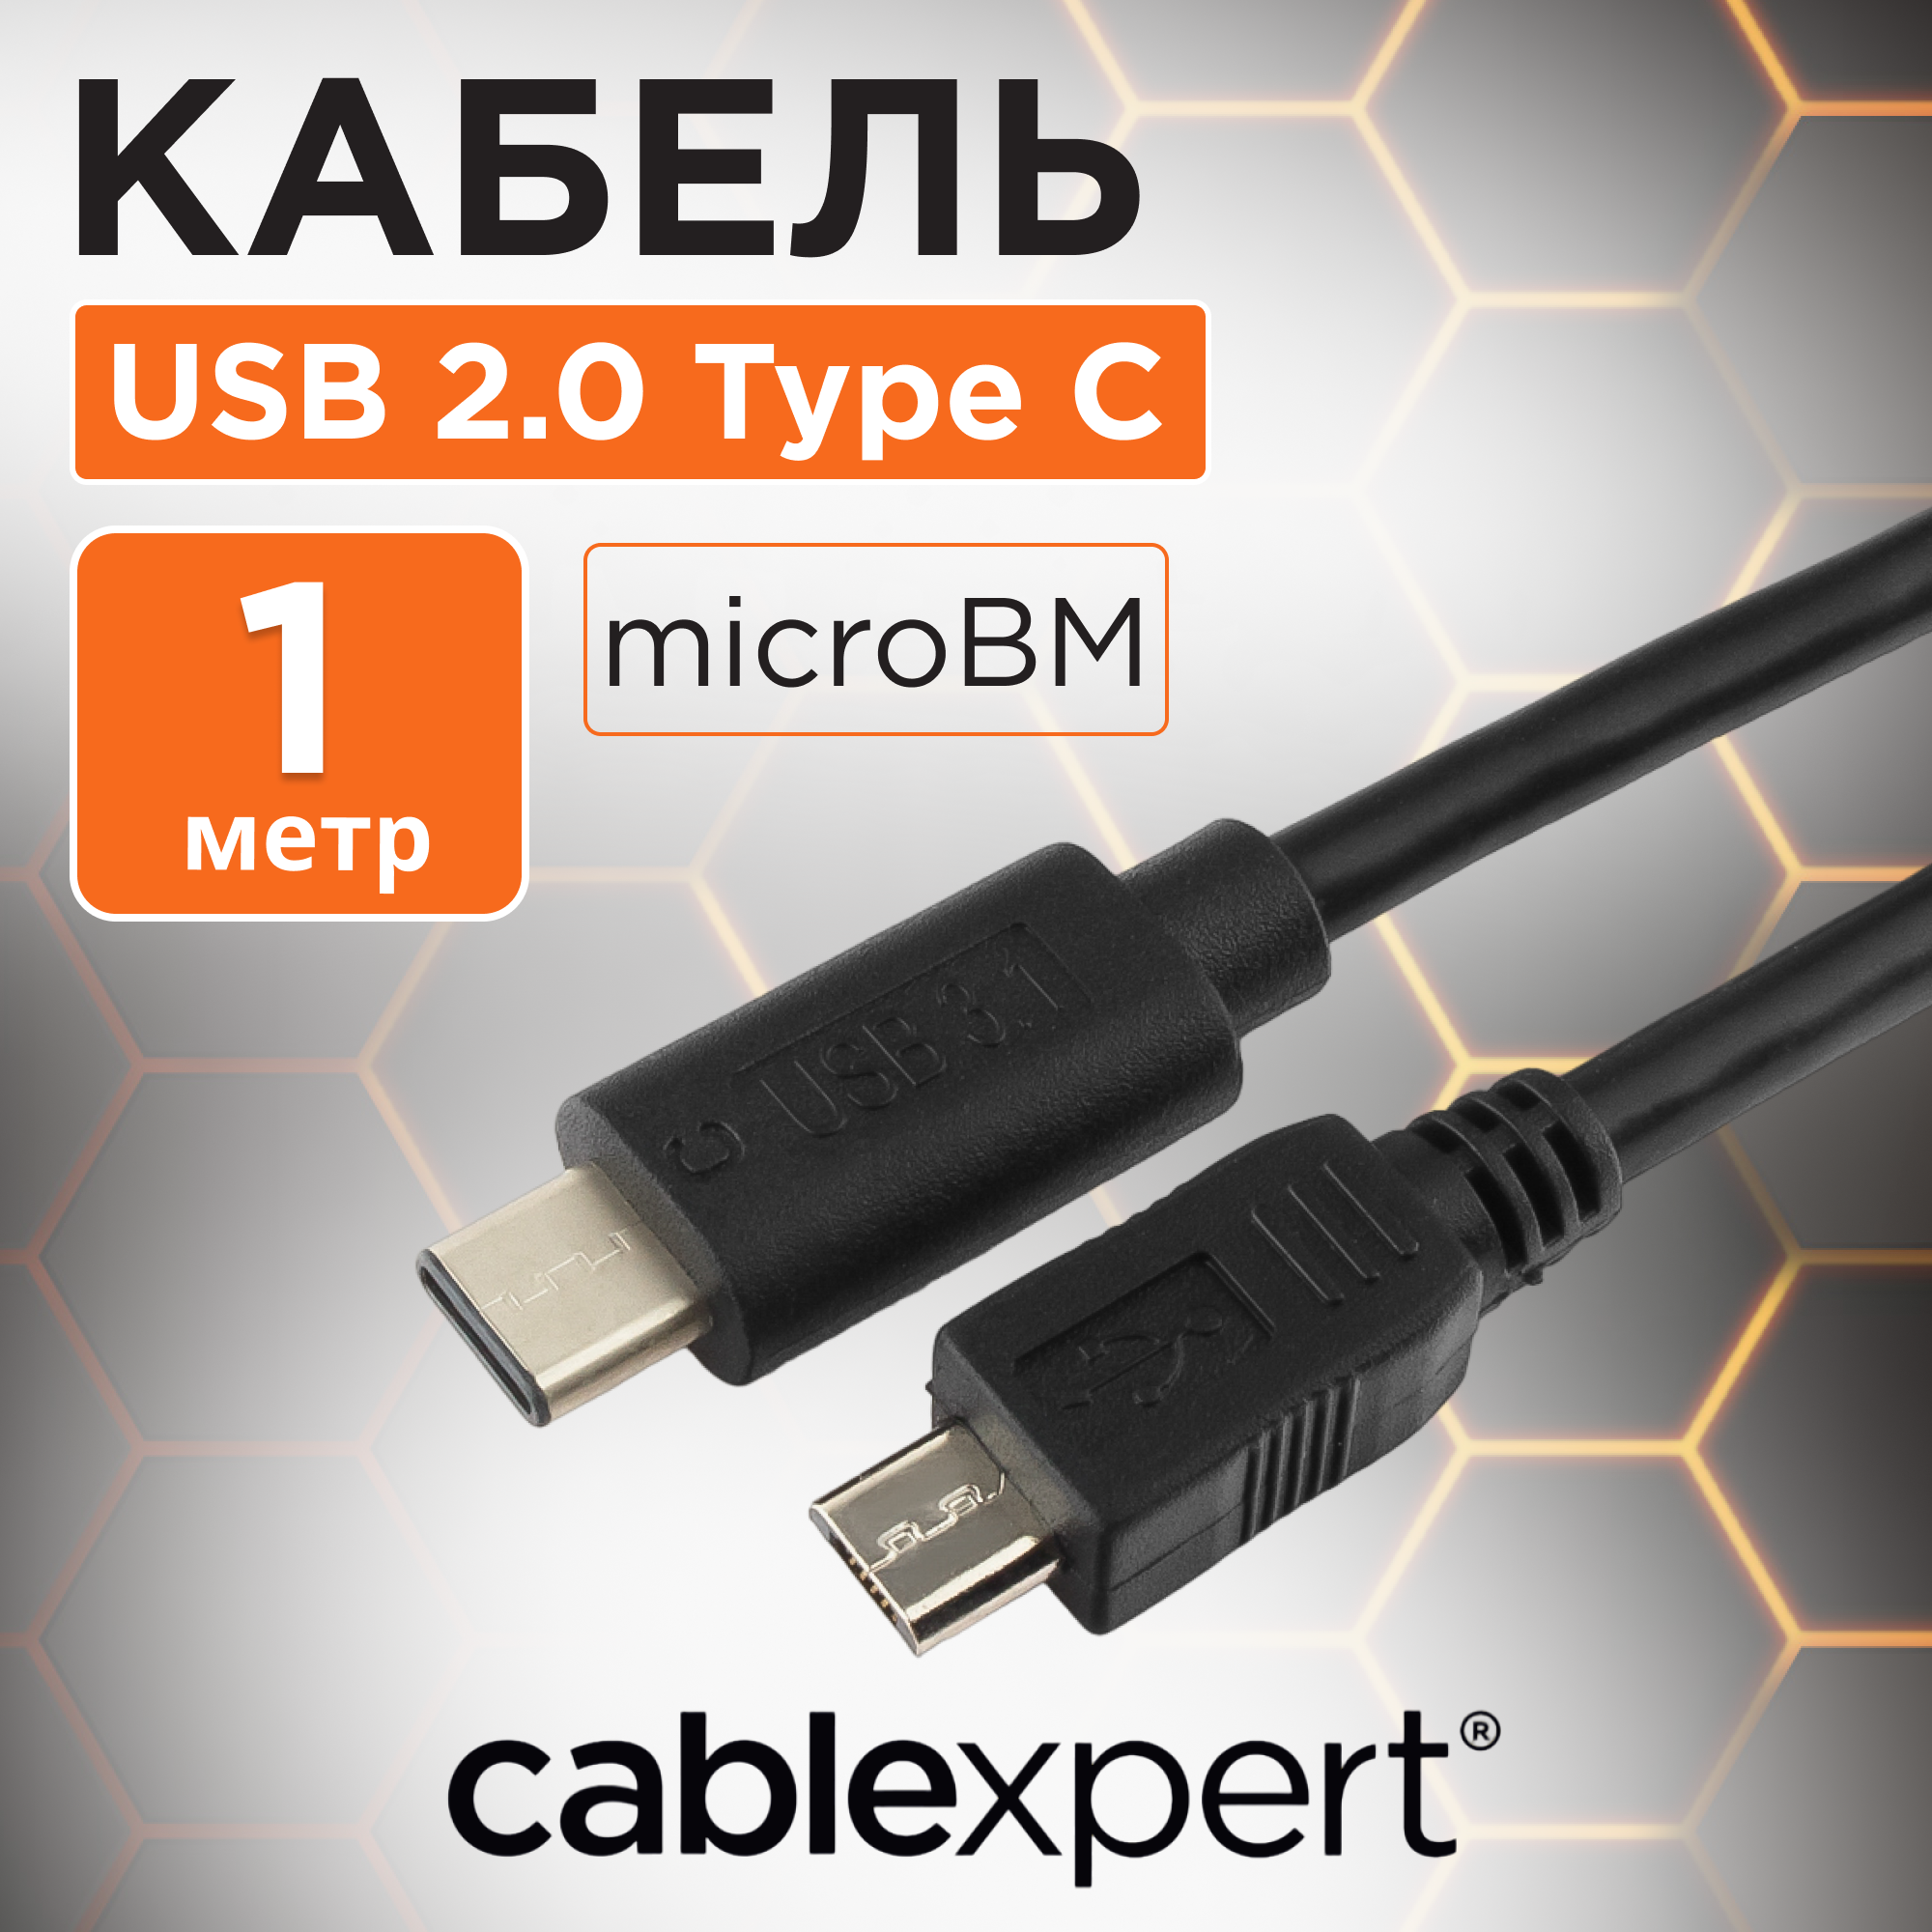 Кабель USB Type-C - microBM Cablexpert CCP-USB2-mBMCM-1M, 1 м